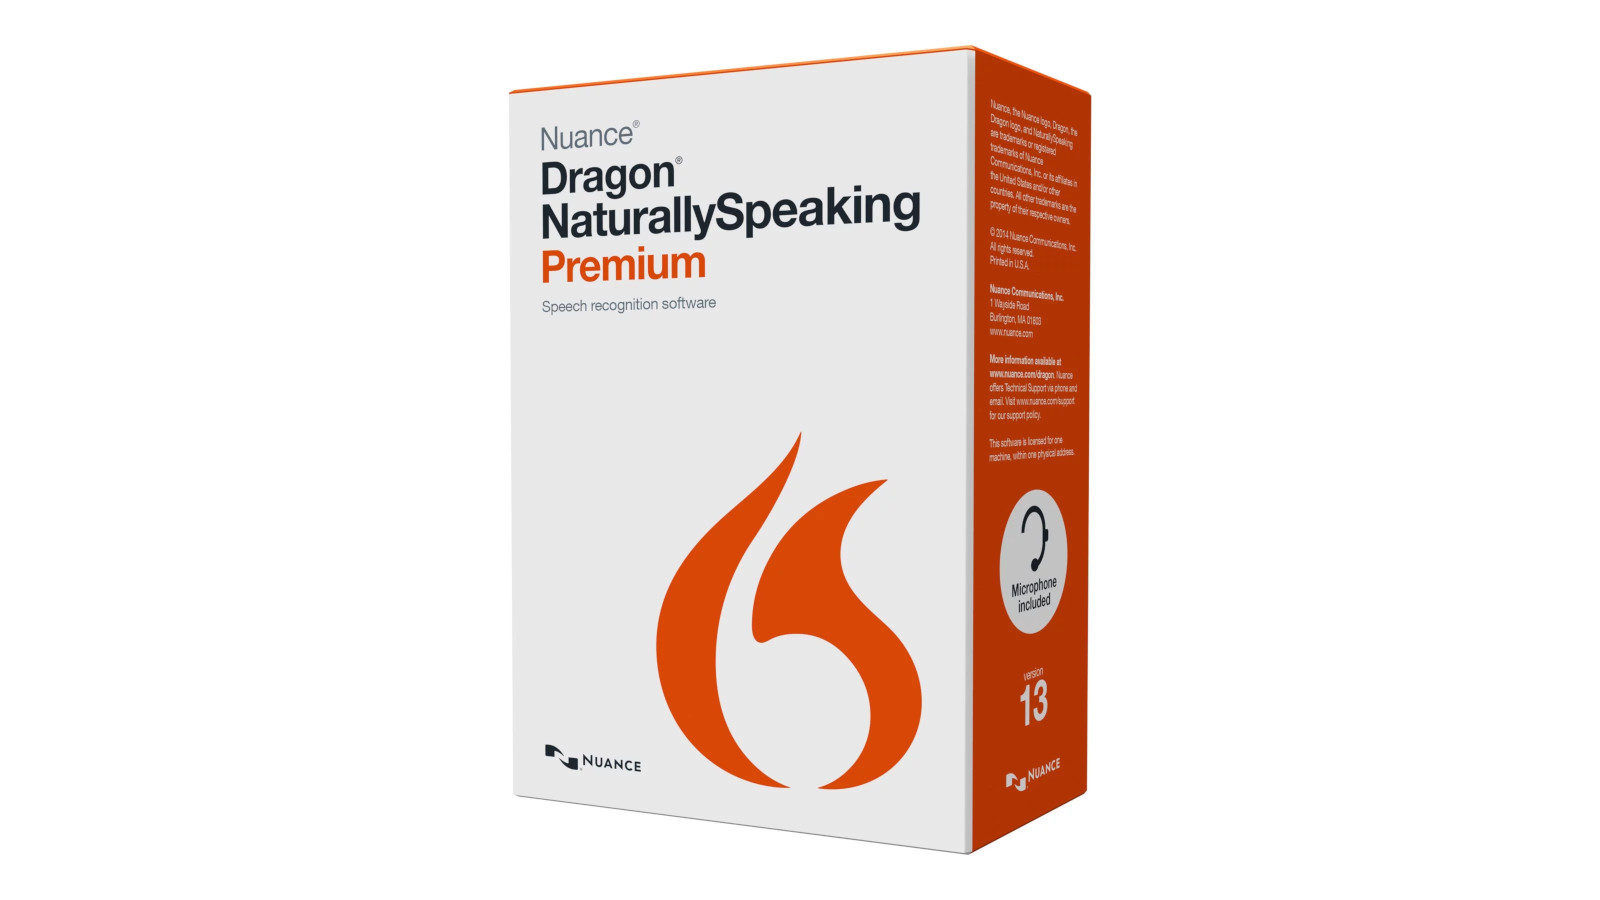 Nuance Dragon NaturallySpeaking Premium 13 Key (Lifetime / 1 PC) [$ 13.73]